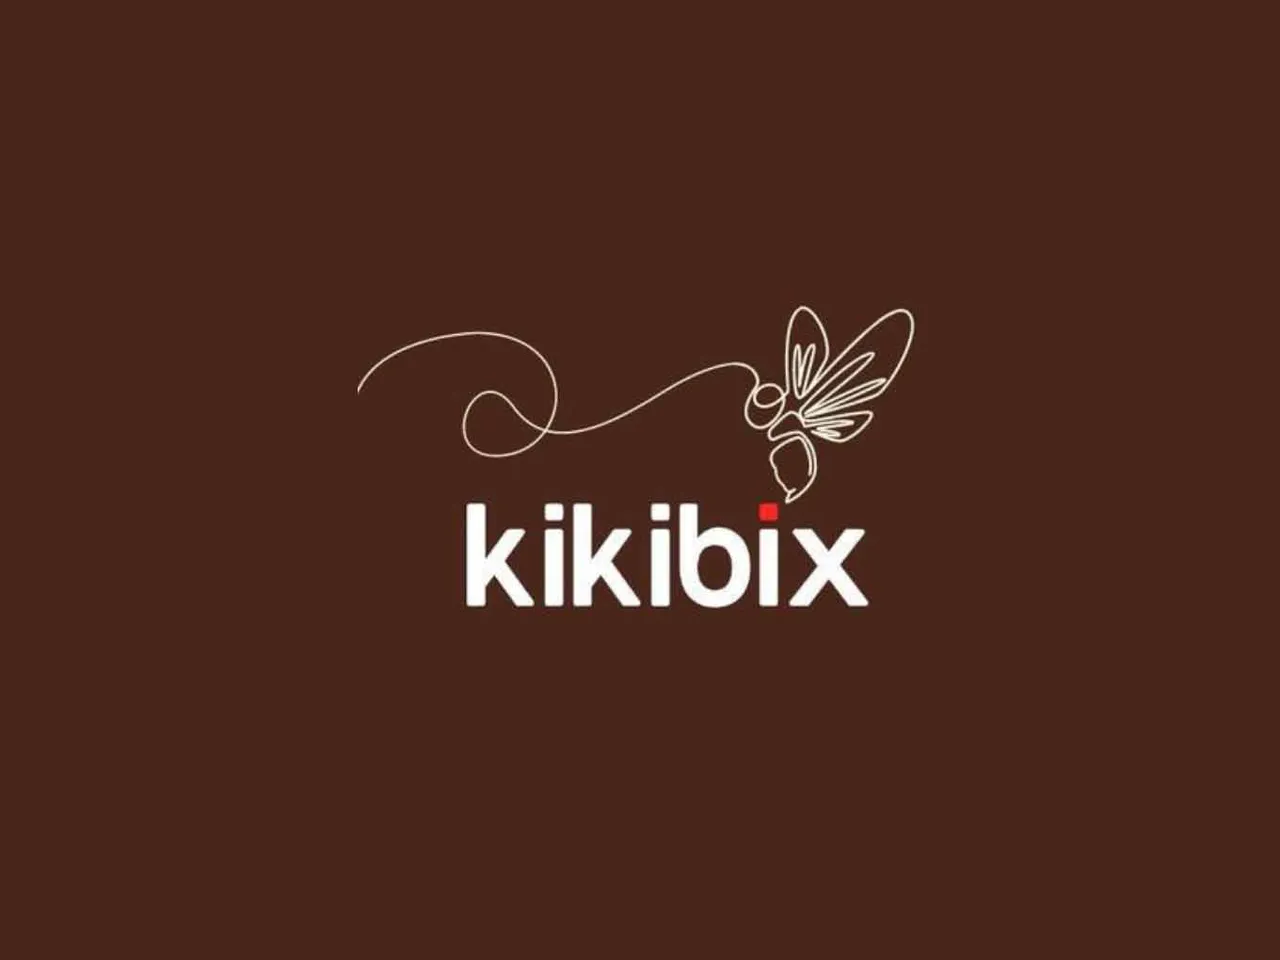 D2C snacking startup Kikibix raises $300K from unicorn startup founders